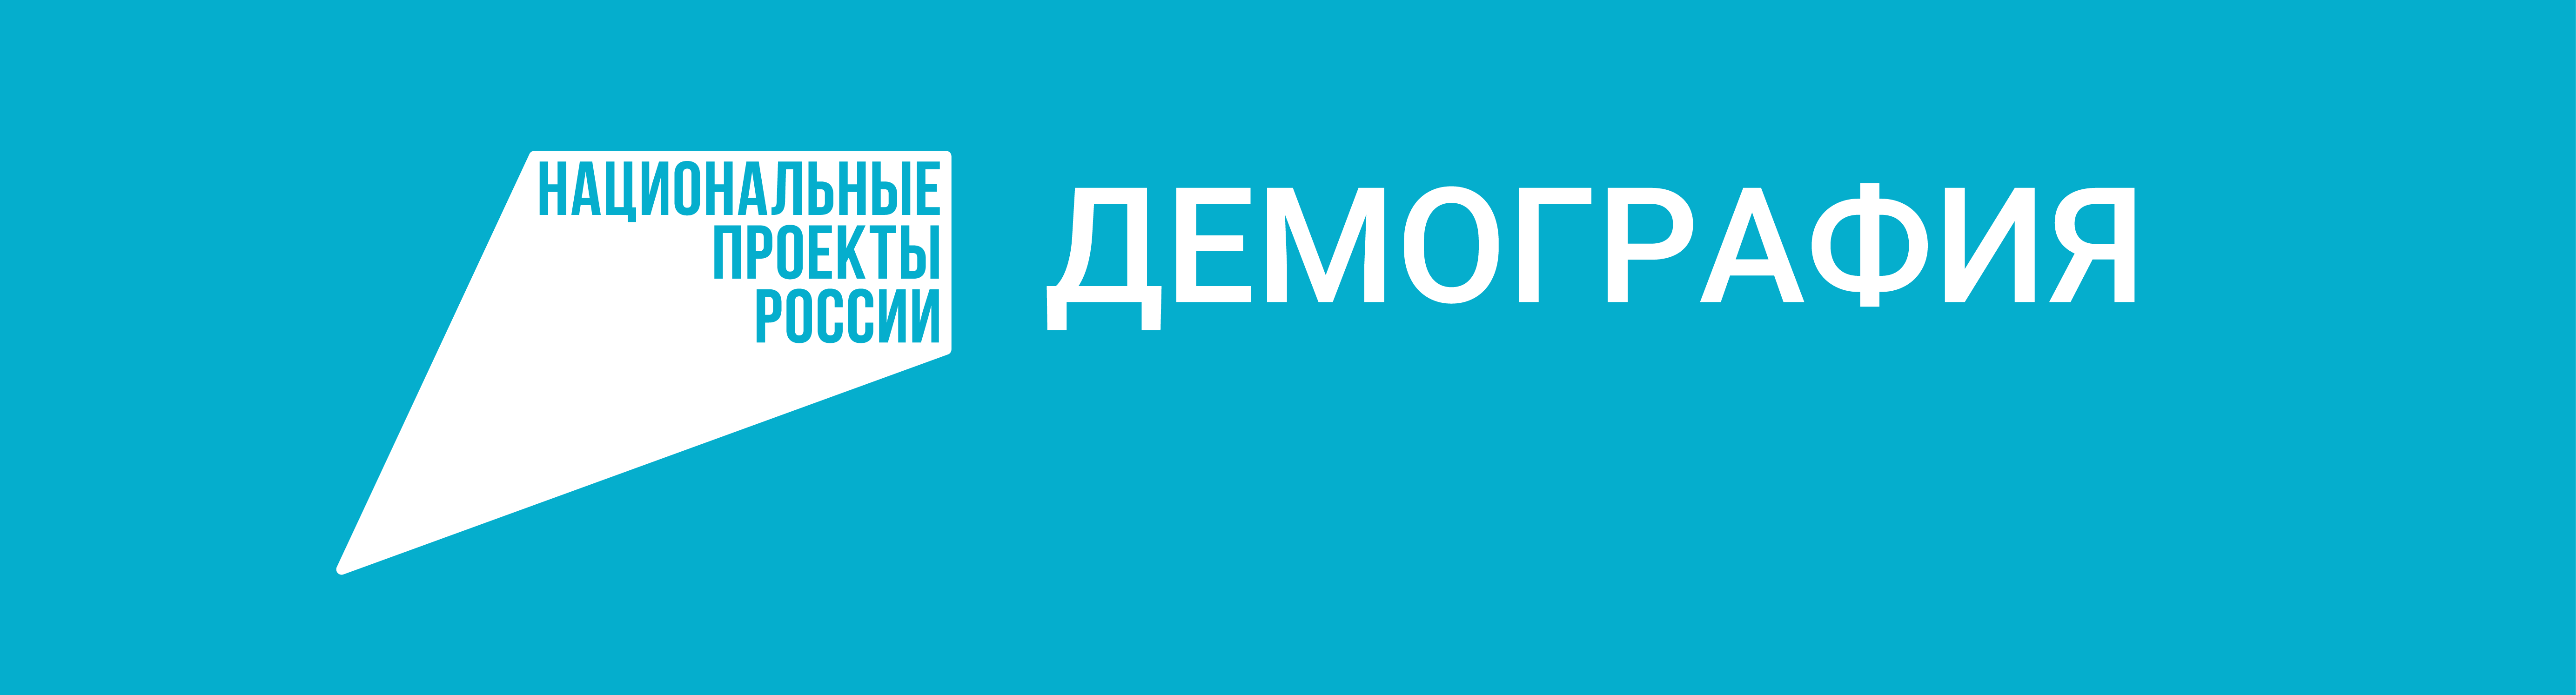 mintrud.gov.ru/ministry/programms/demography